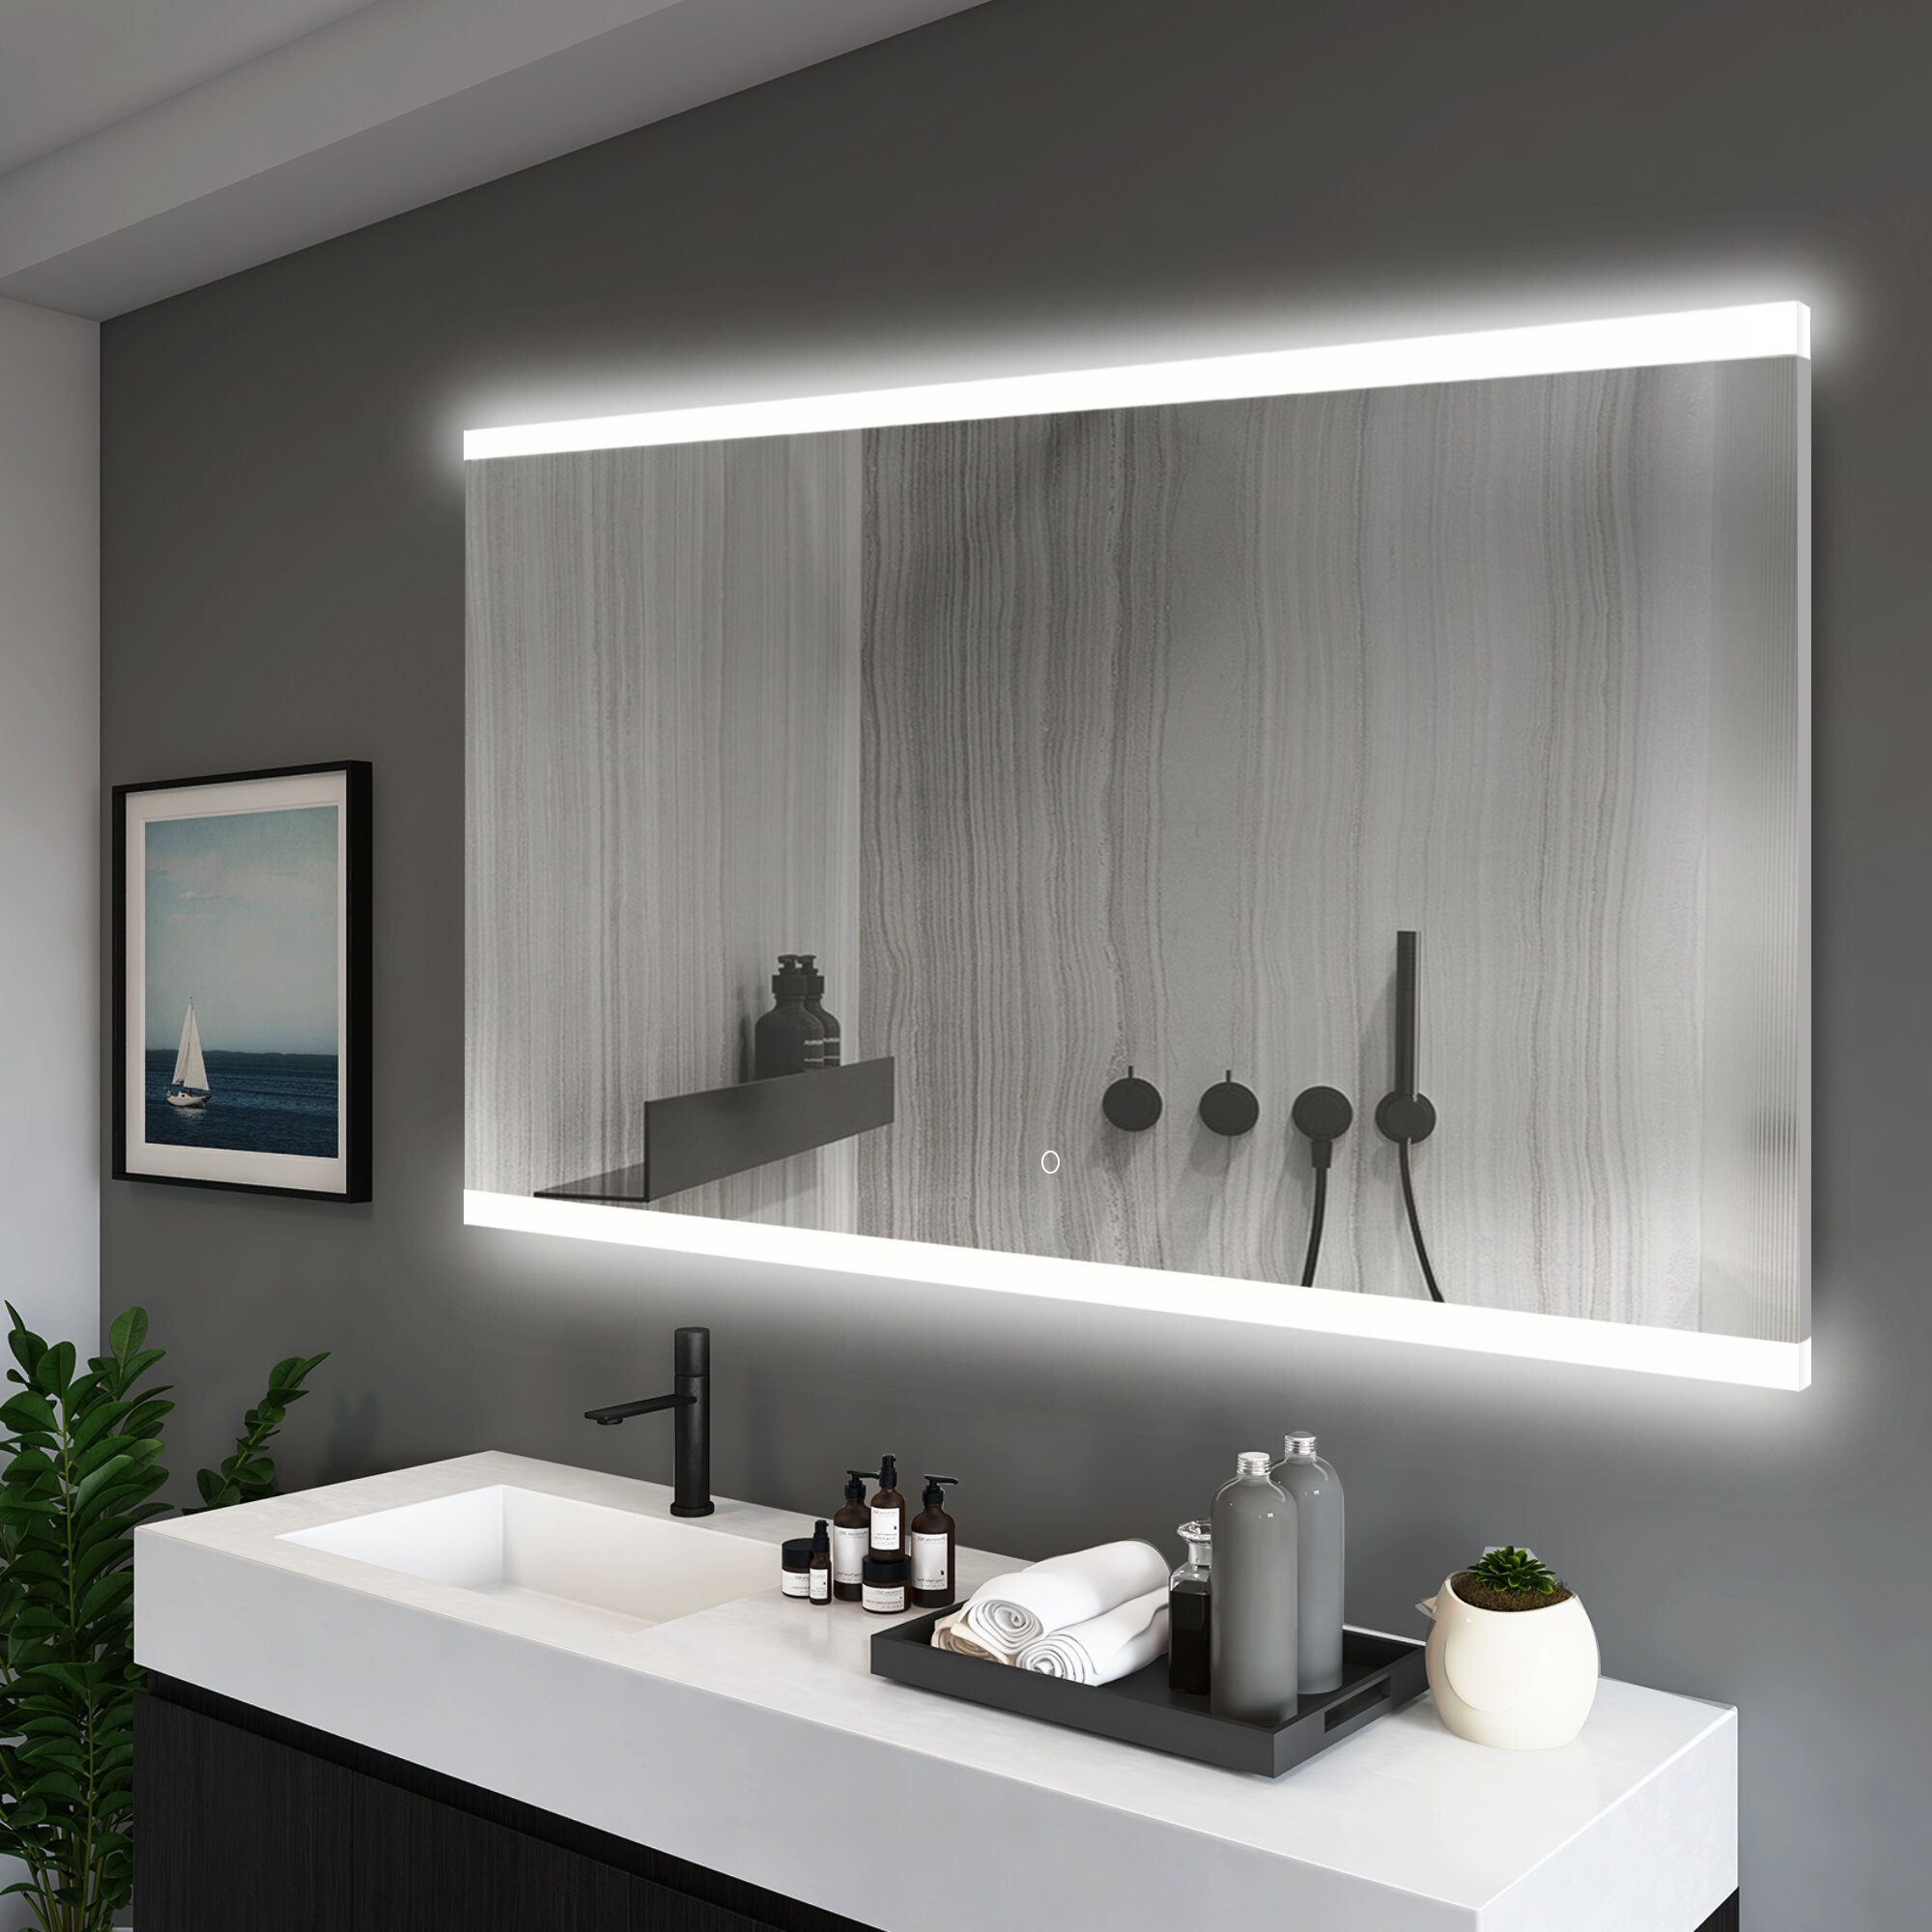 Bathroom LED Light Up Mirror Cabinet With Storage/Demister/Sensor Switch/Clock 